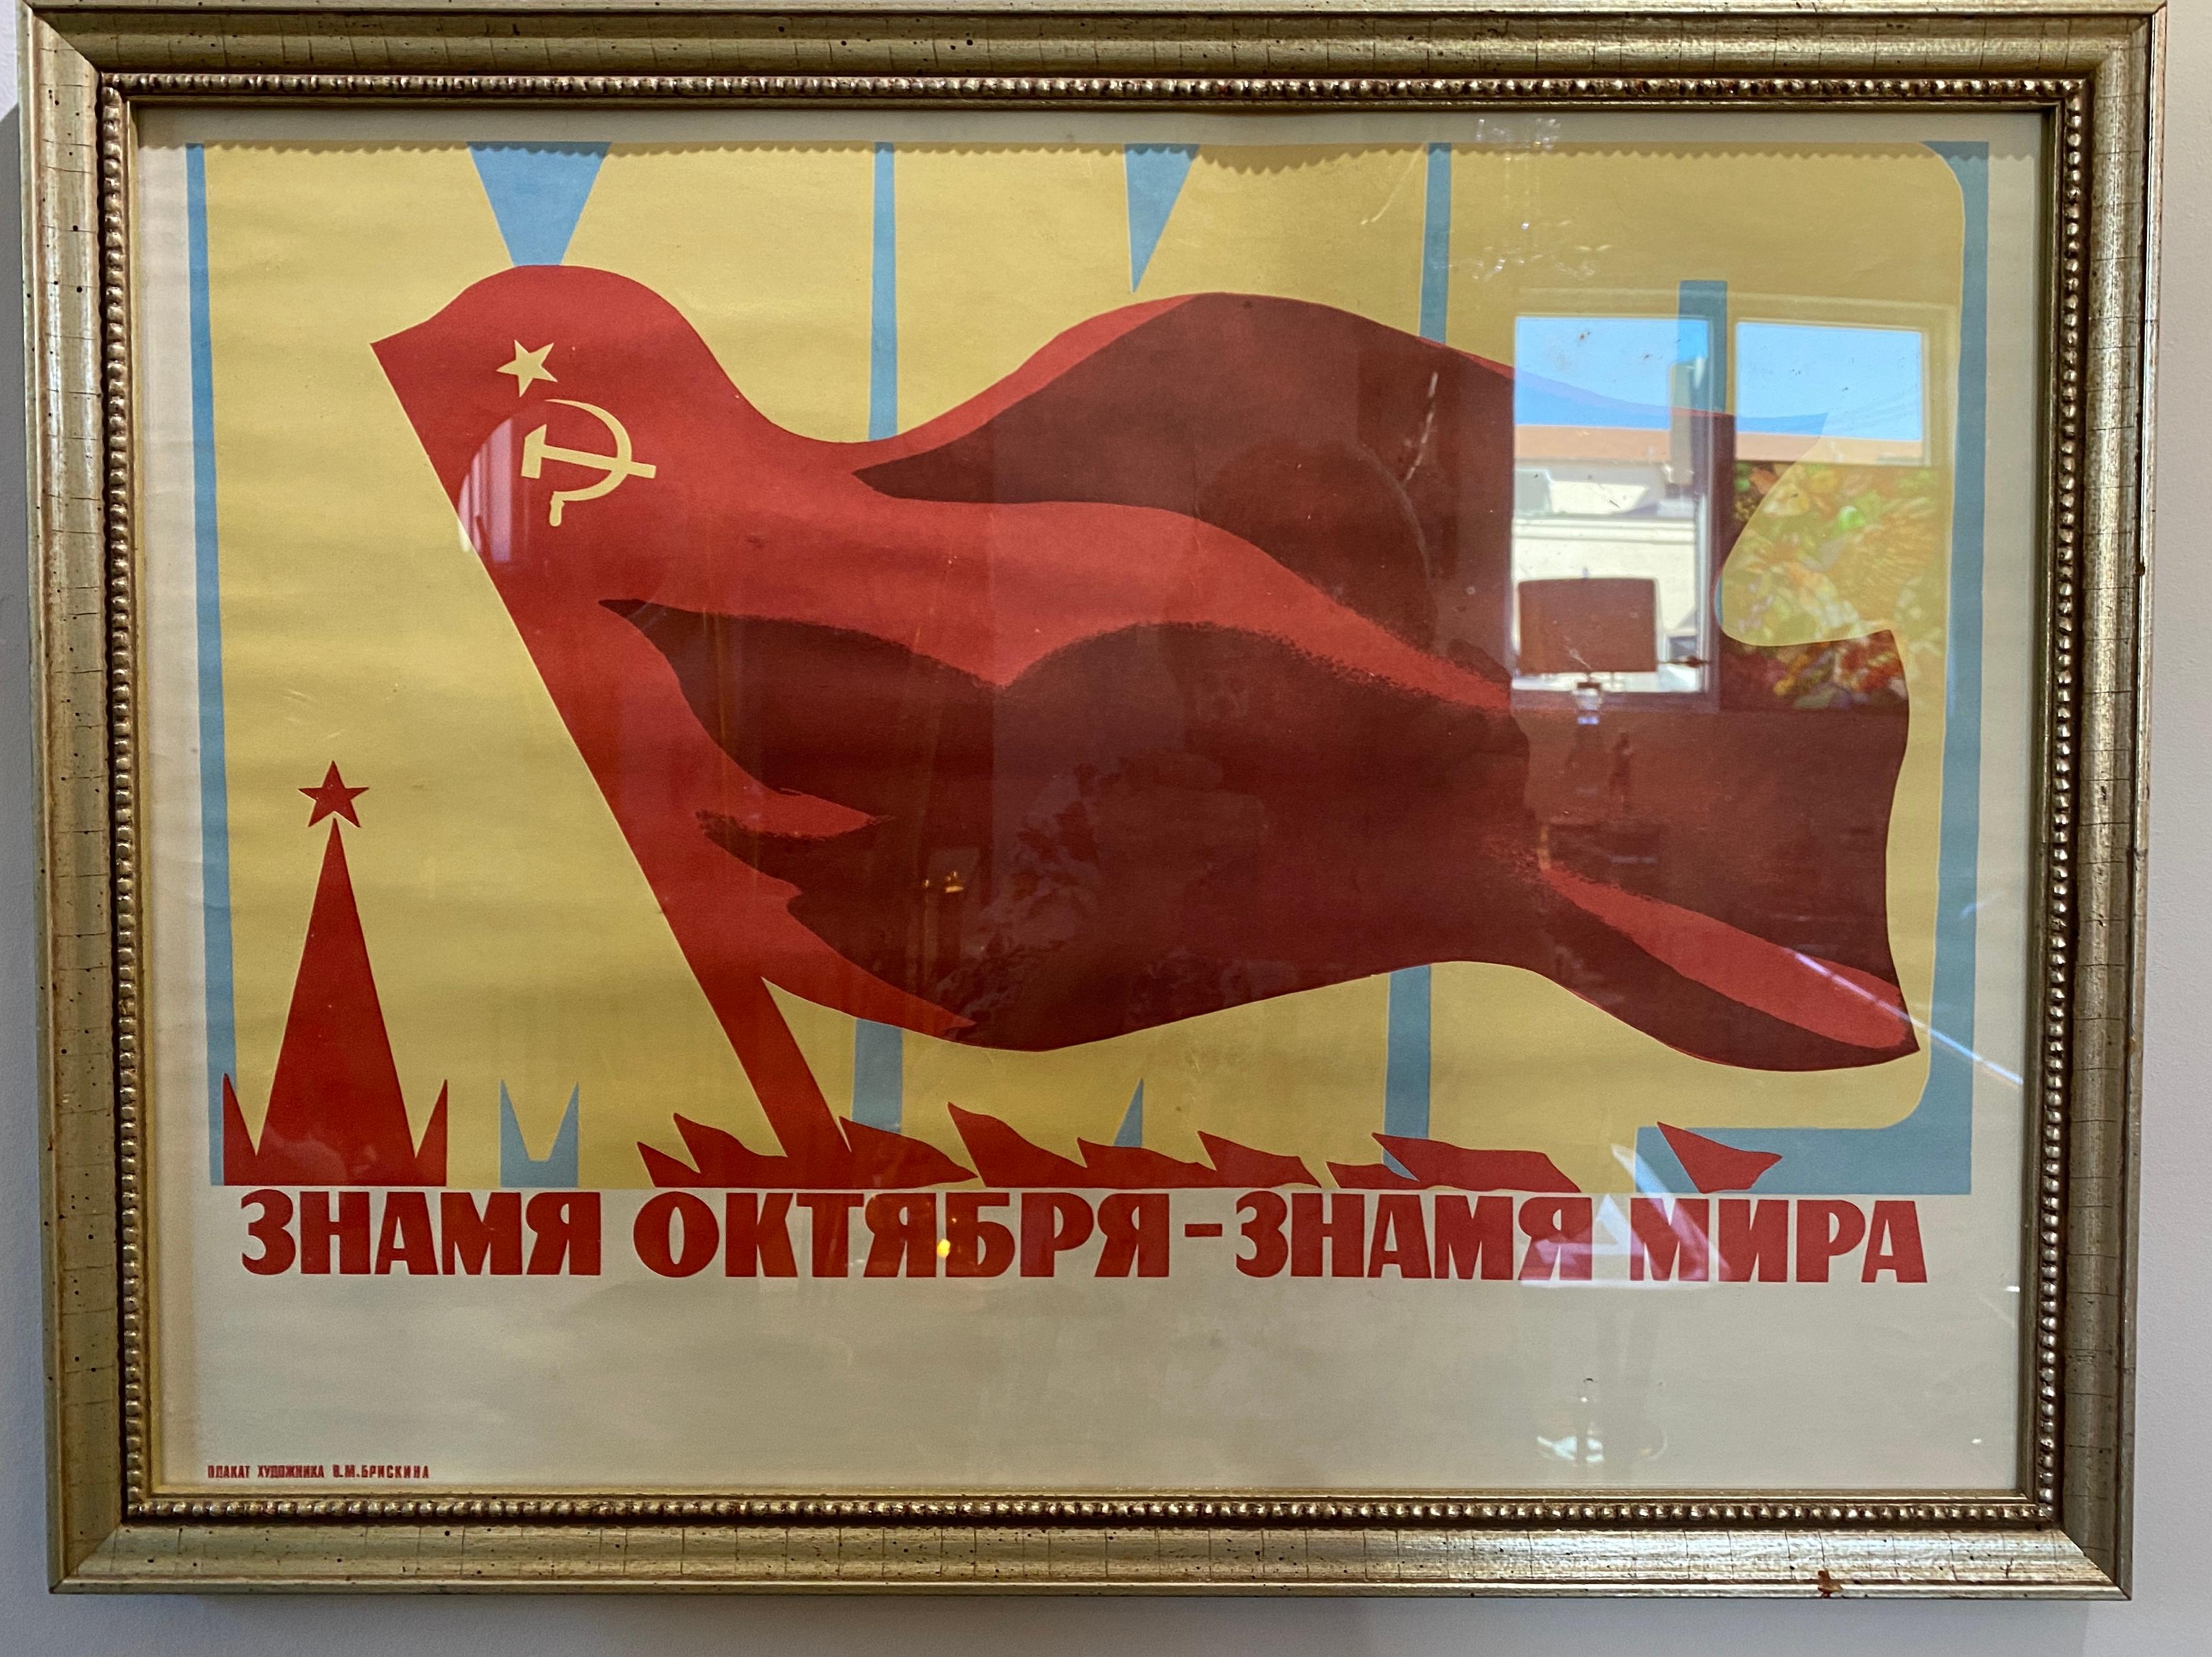 Paper 1970s Soviet Union Poster